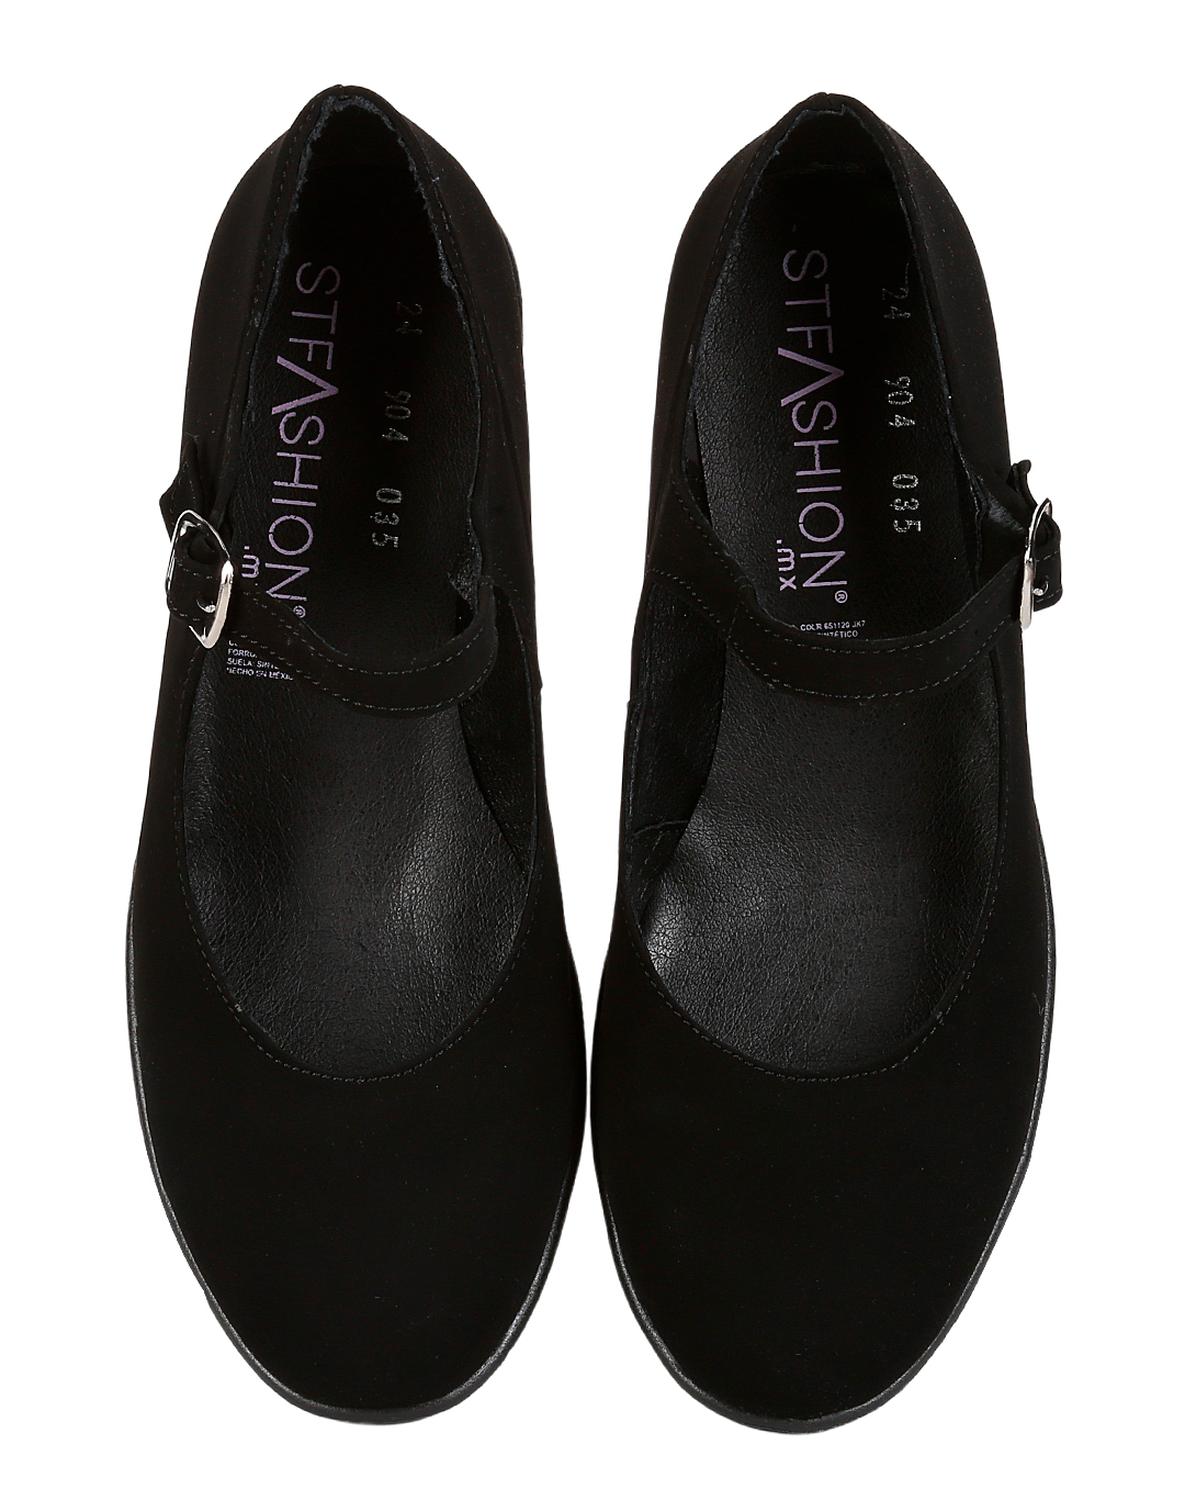 Zapato Casual Cuña Mujer Negro Tipo Nobuk Stfashion 04603900